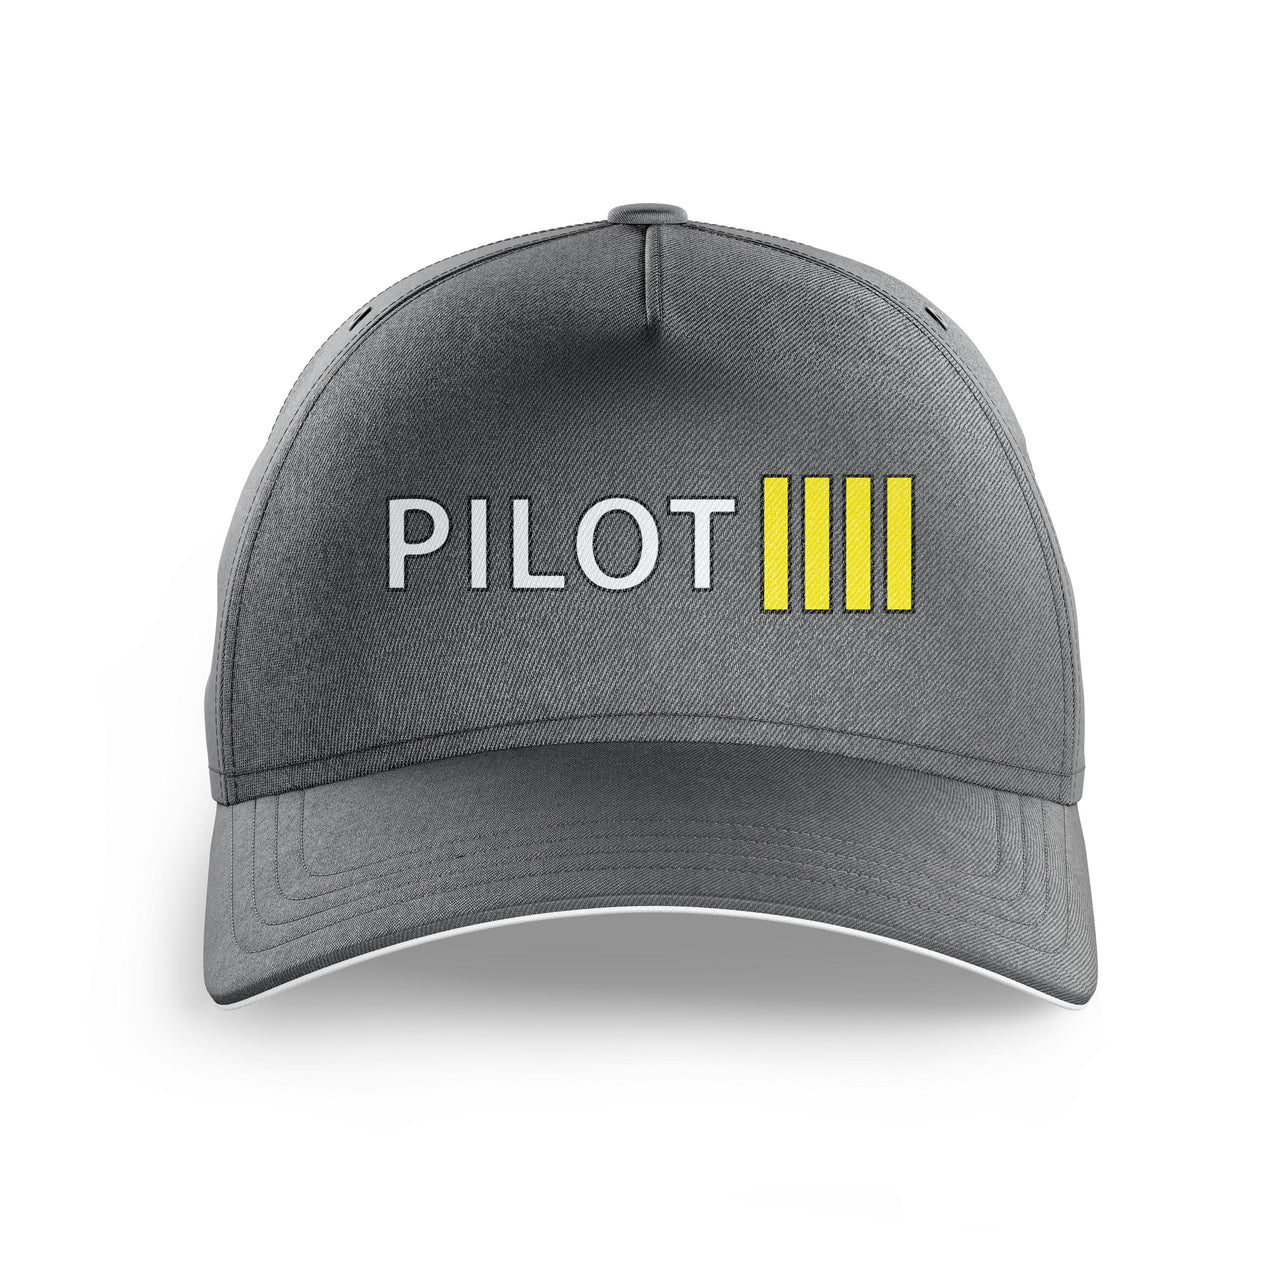 Pilot & Stripes (4 Lines) Printed Hats